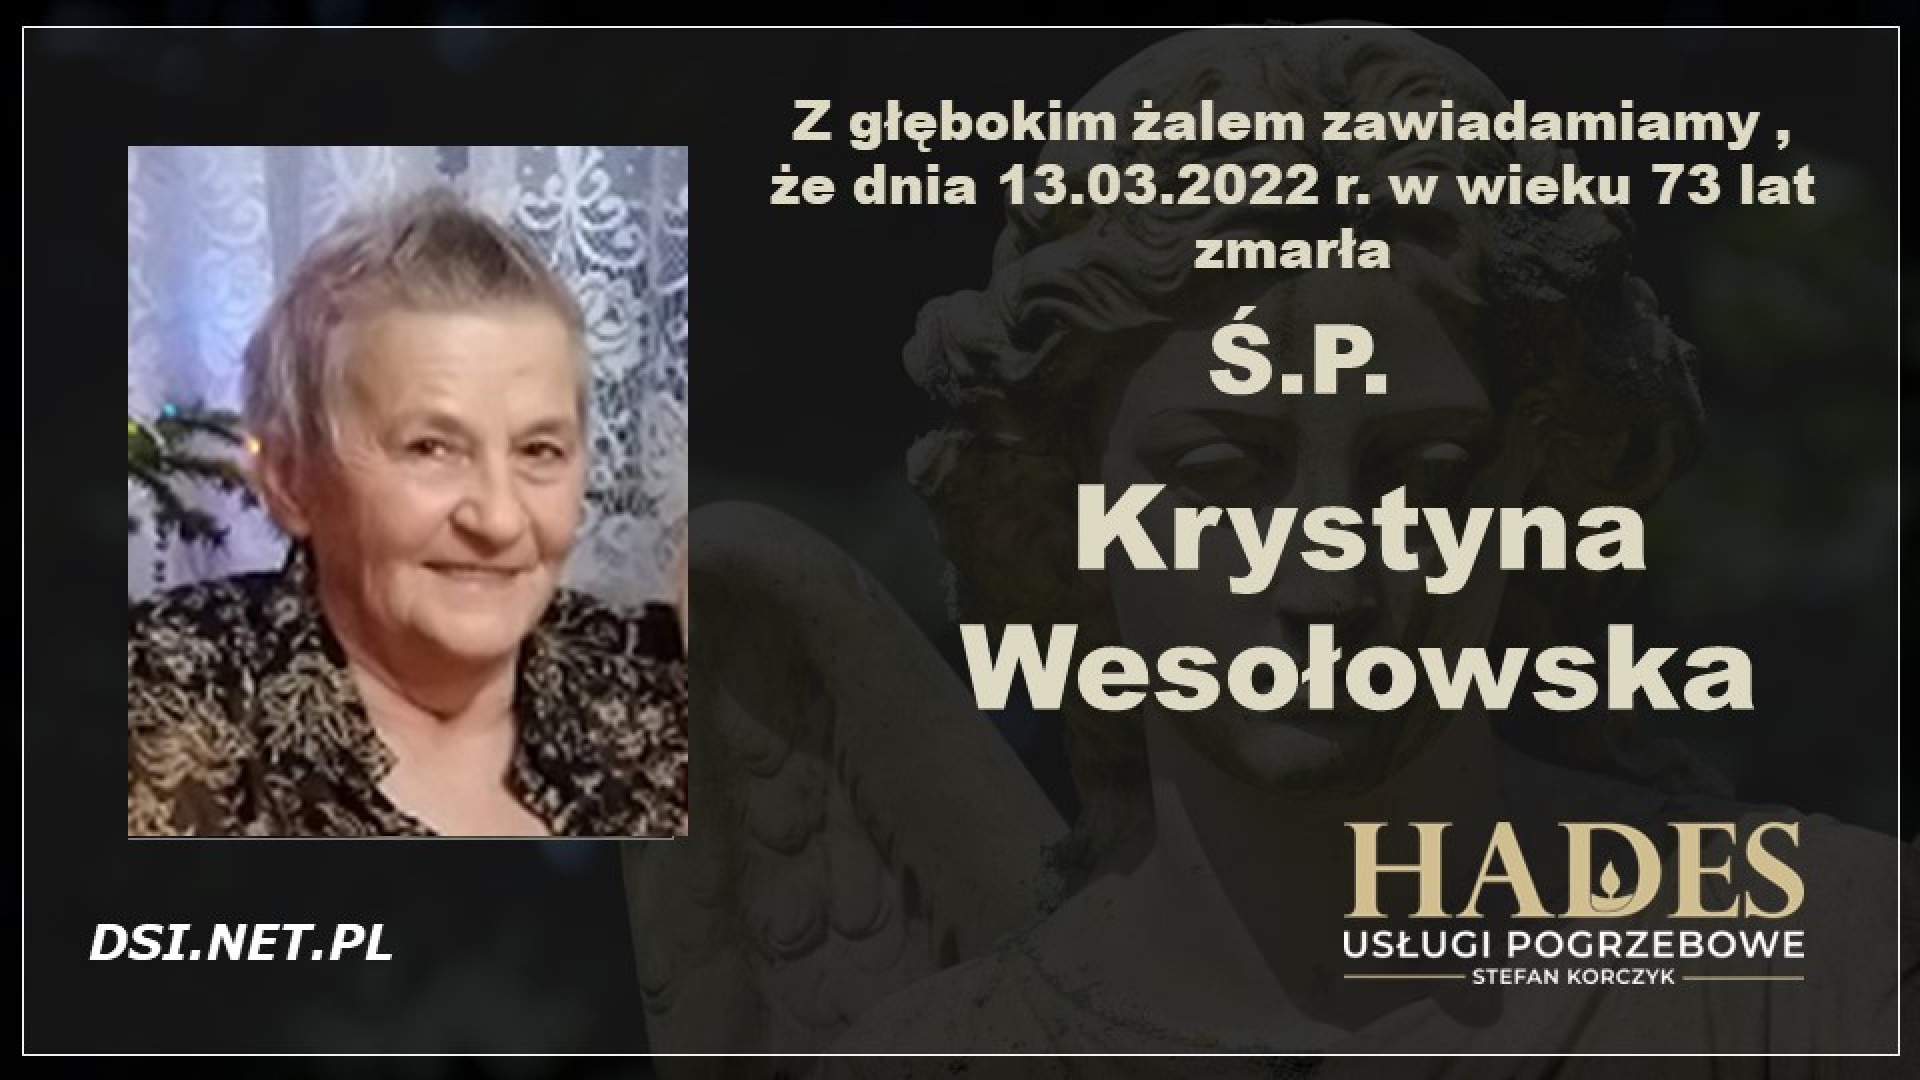 Ś.P. Krystyna Wesołowska